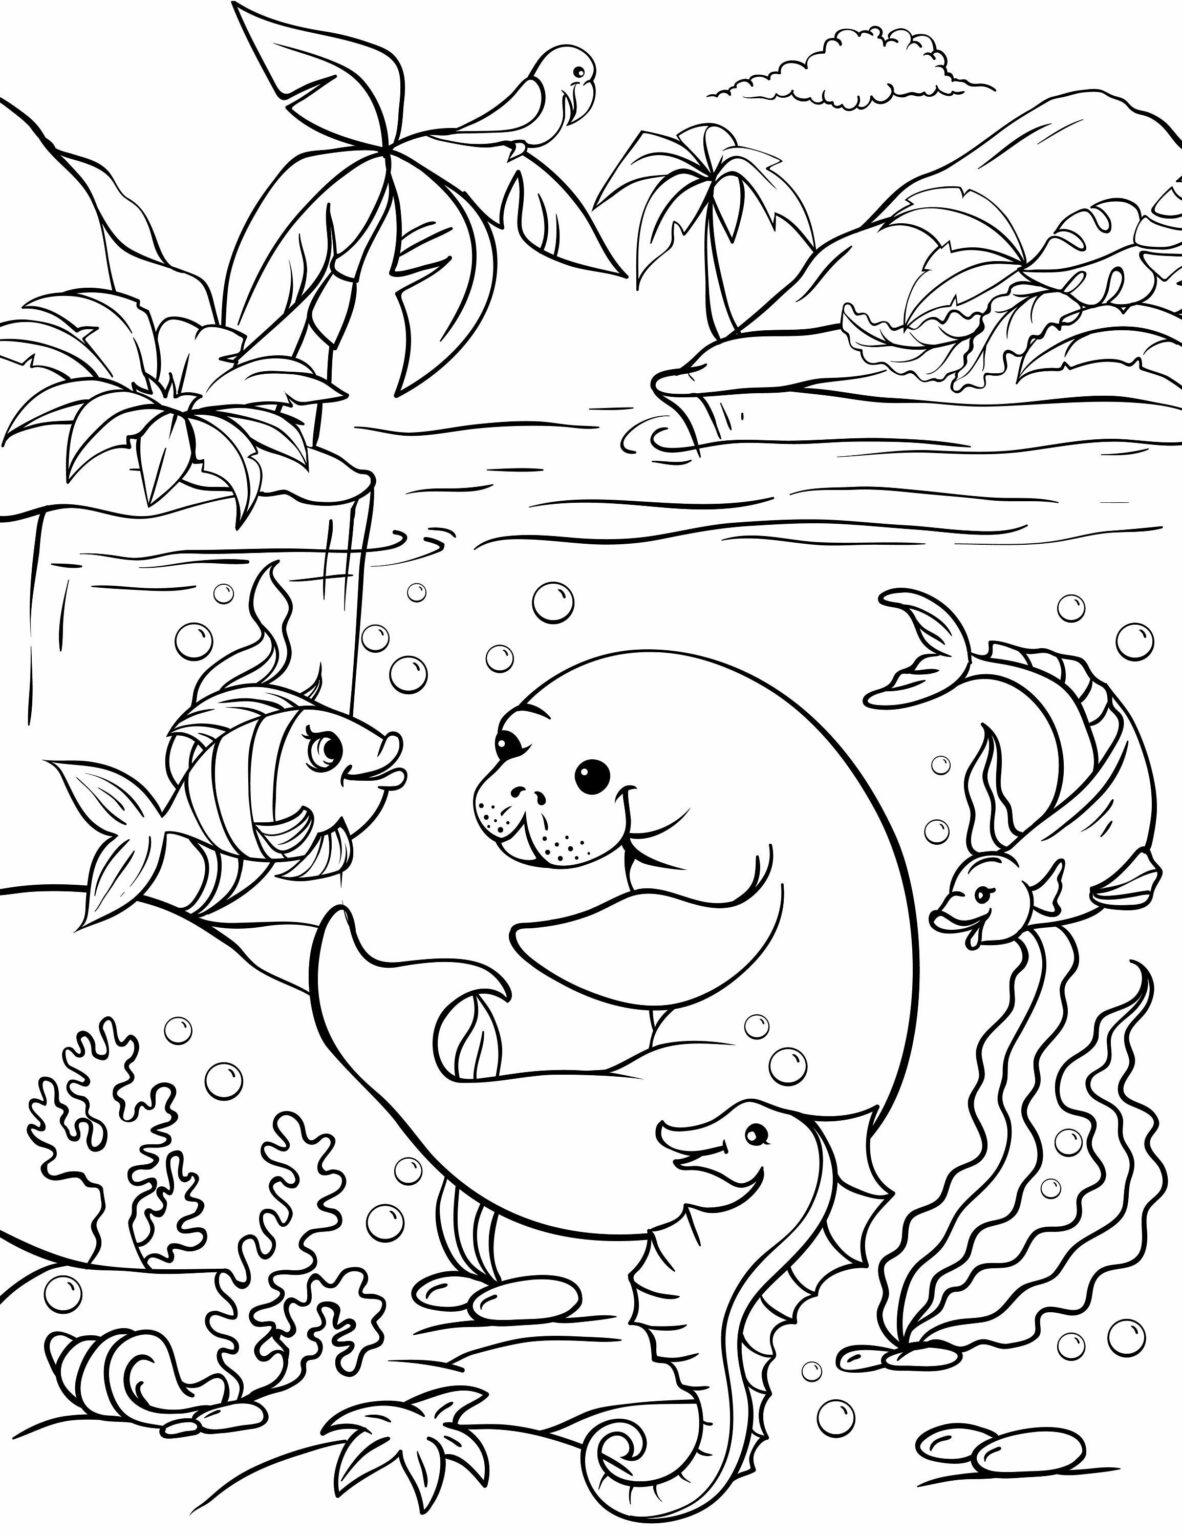 Sea Creatures Coloring Pages Pdf Free Printable - Coloringfolder.com